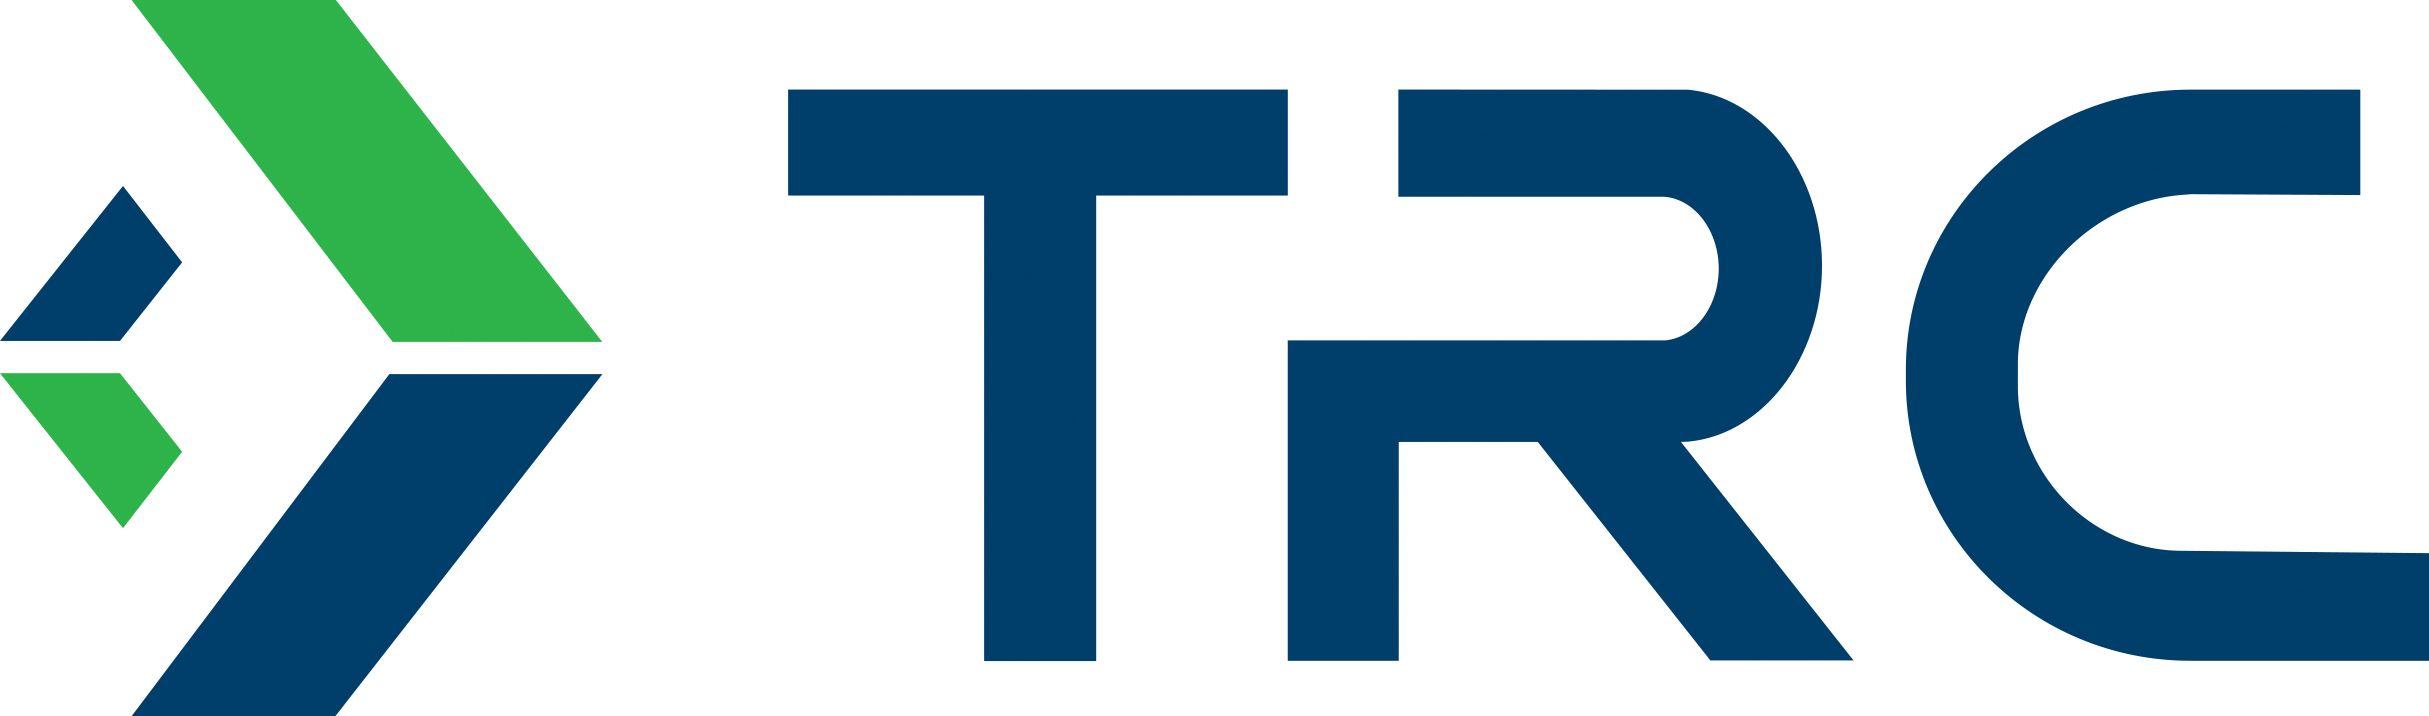 TRC Logo - EDD Format for TRC | EarthSoft, Inc. Environmental Data Management ...